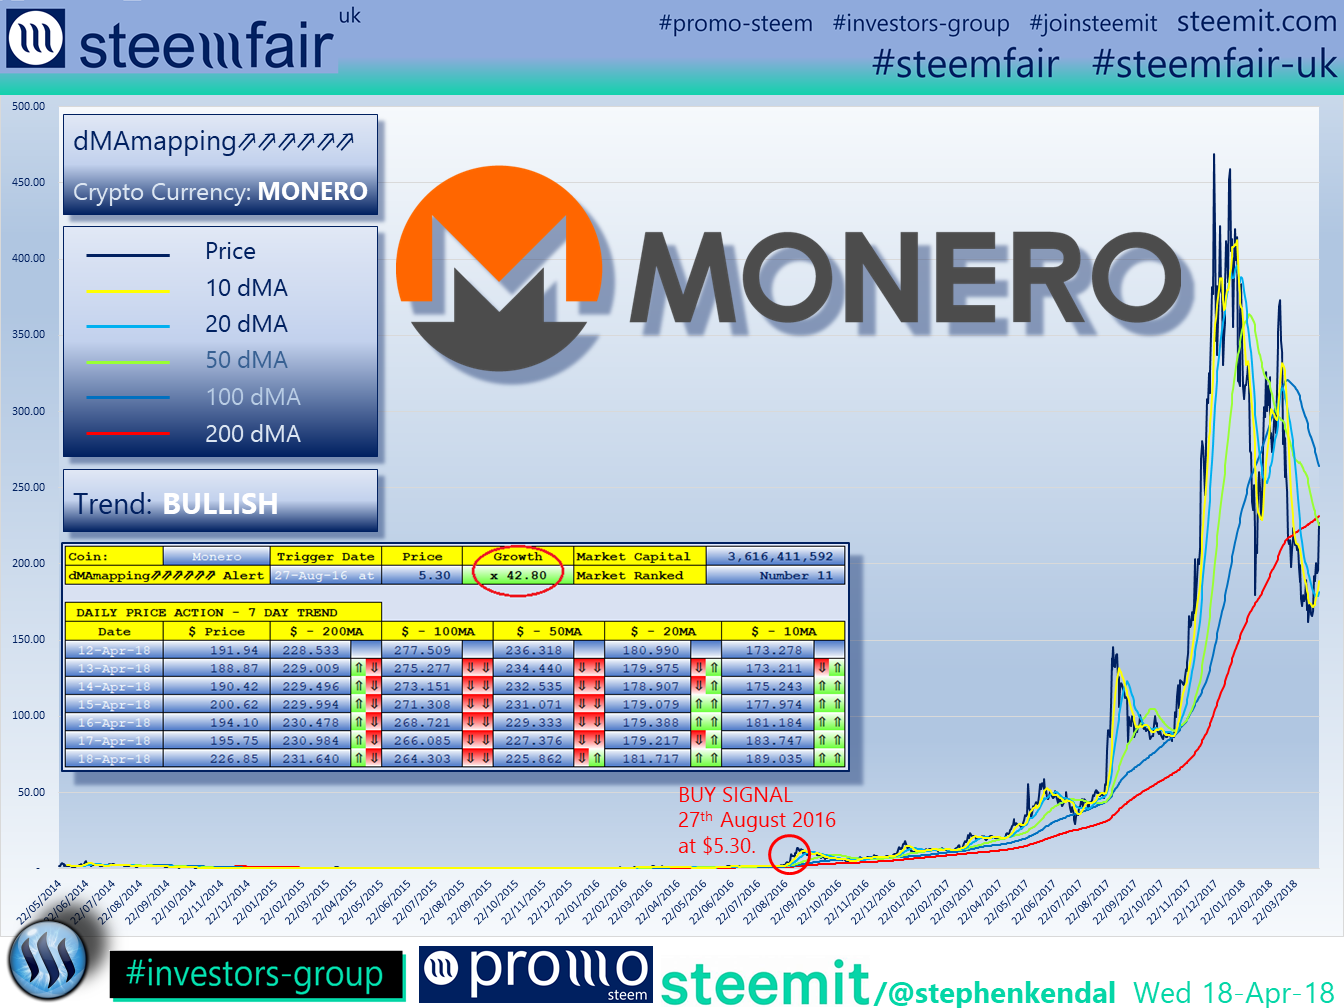 SteemFair SteemFair-uk Promo-Steem Investors-Group Monero